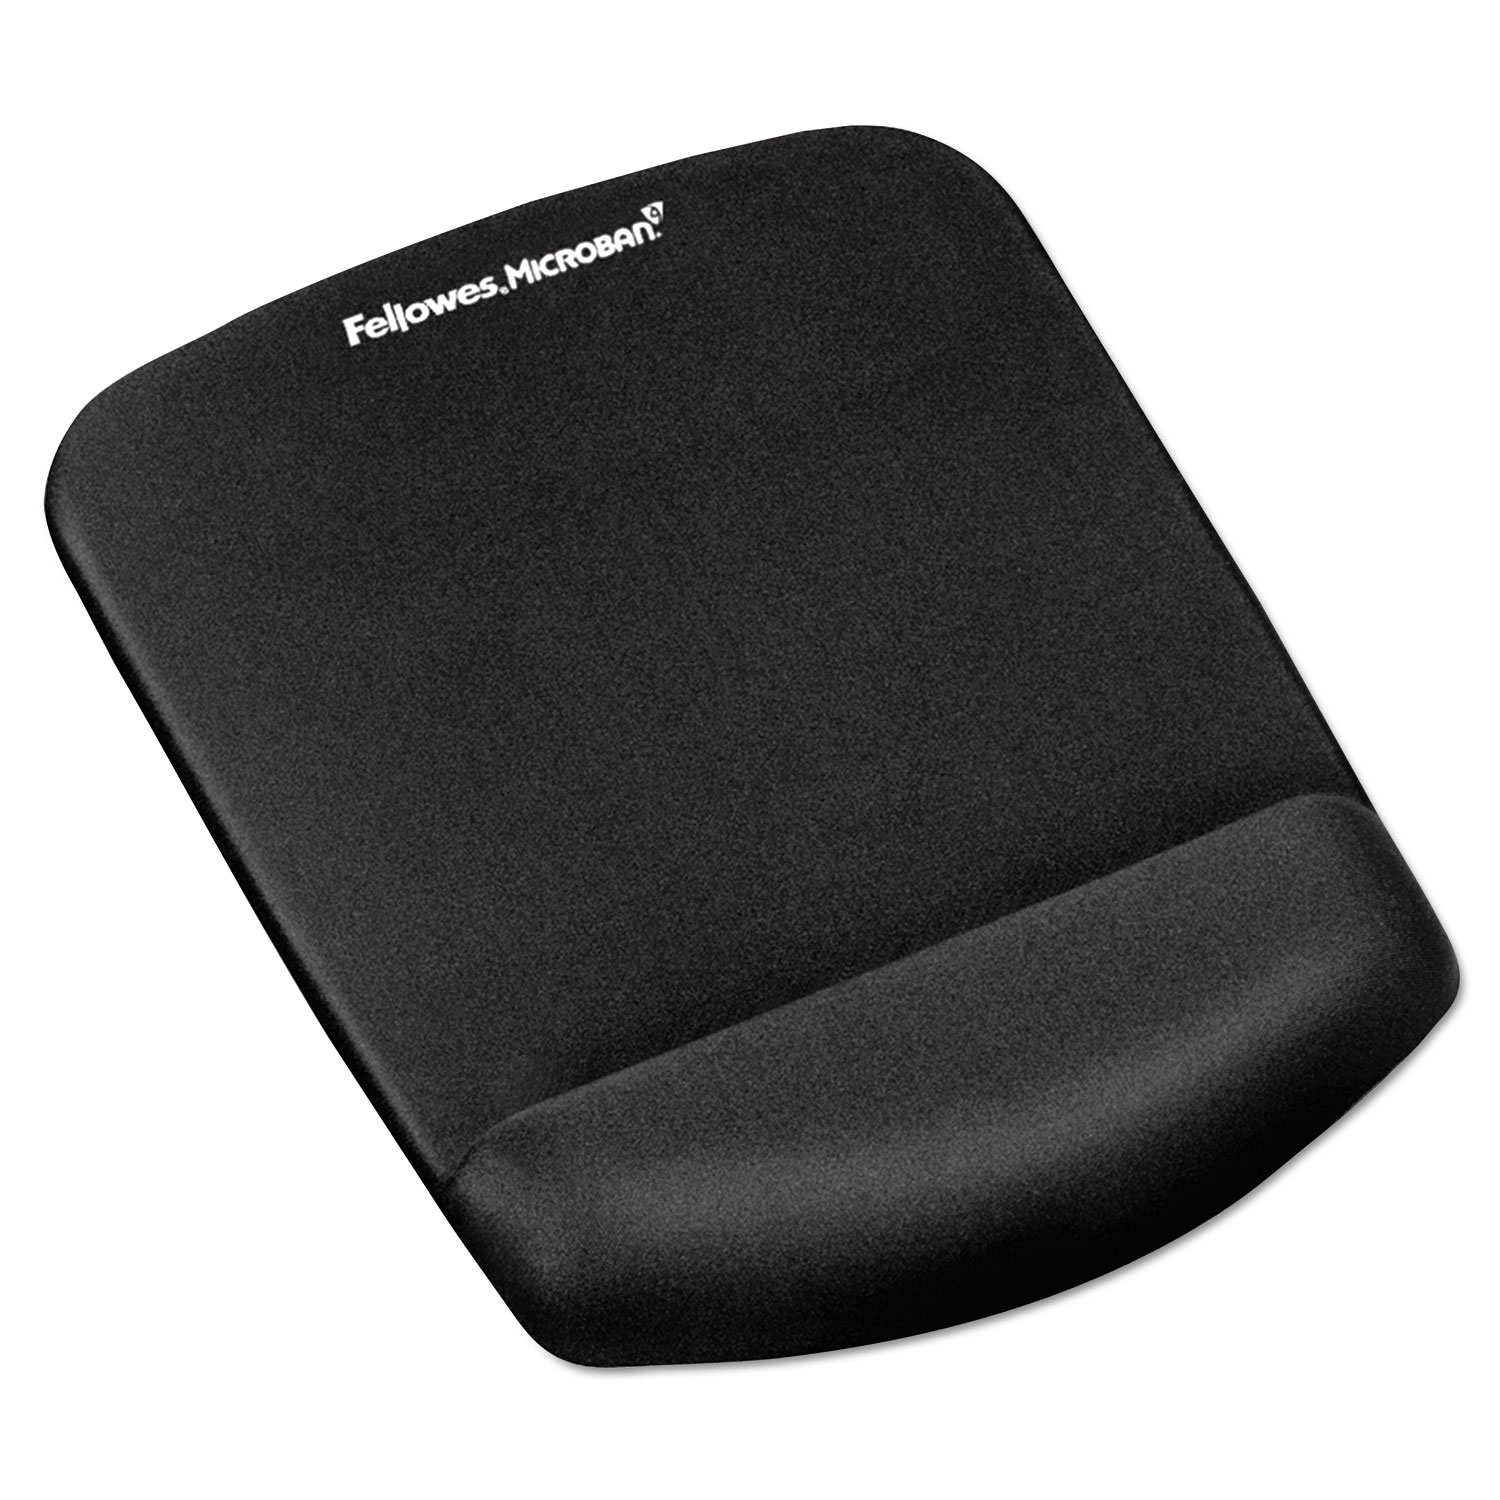 PlushTouch Mouse Pad with Wrist Rest, 7.25 x 9.37, Black